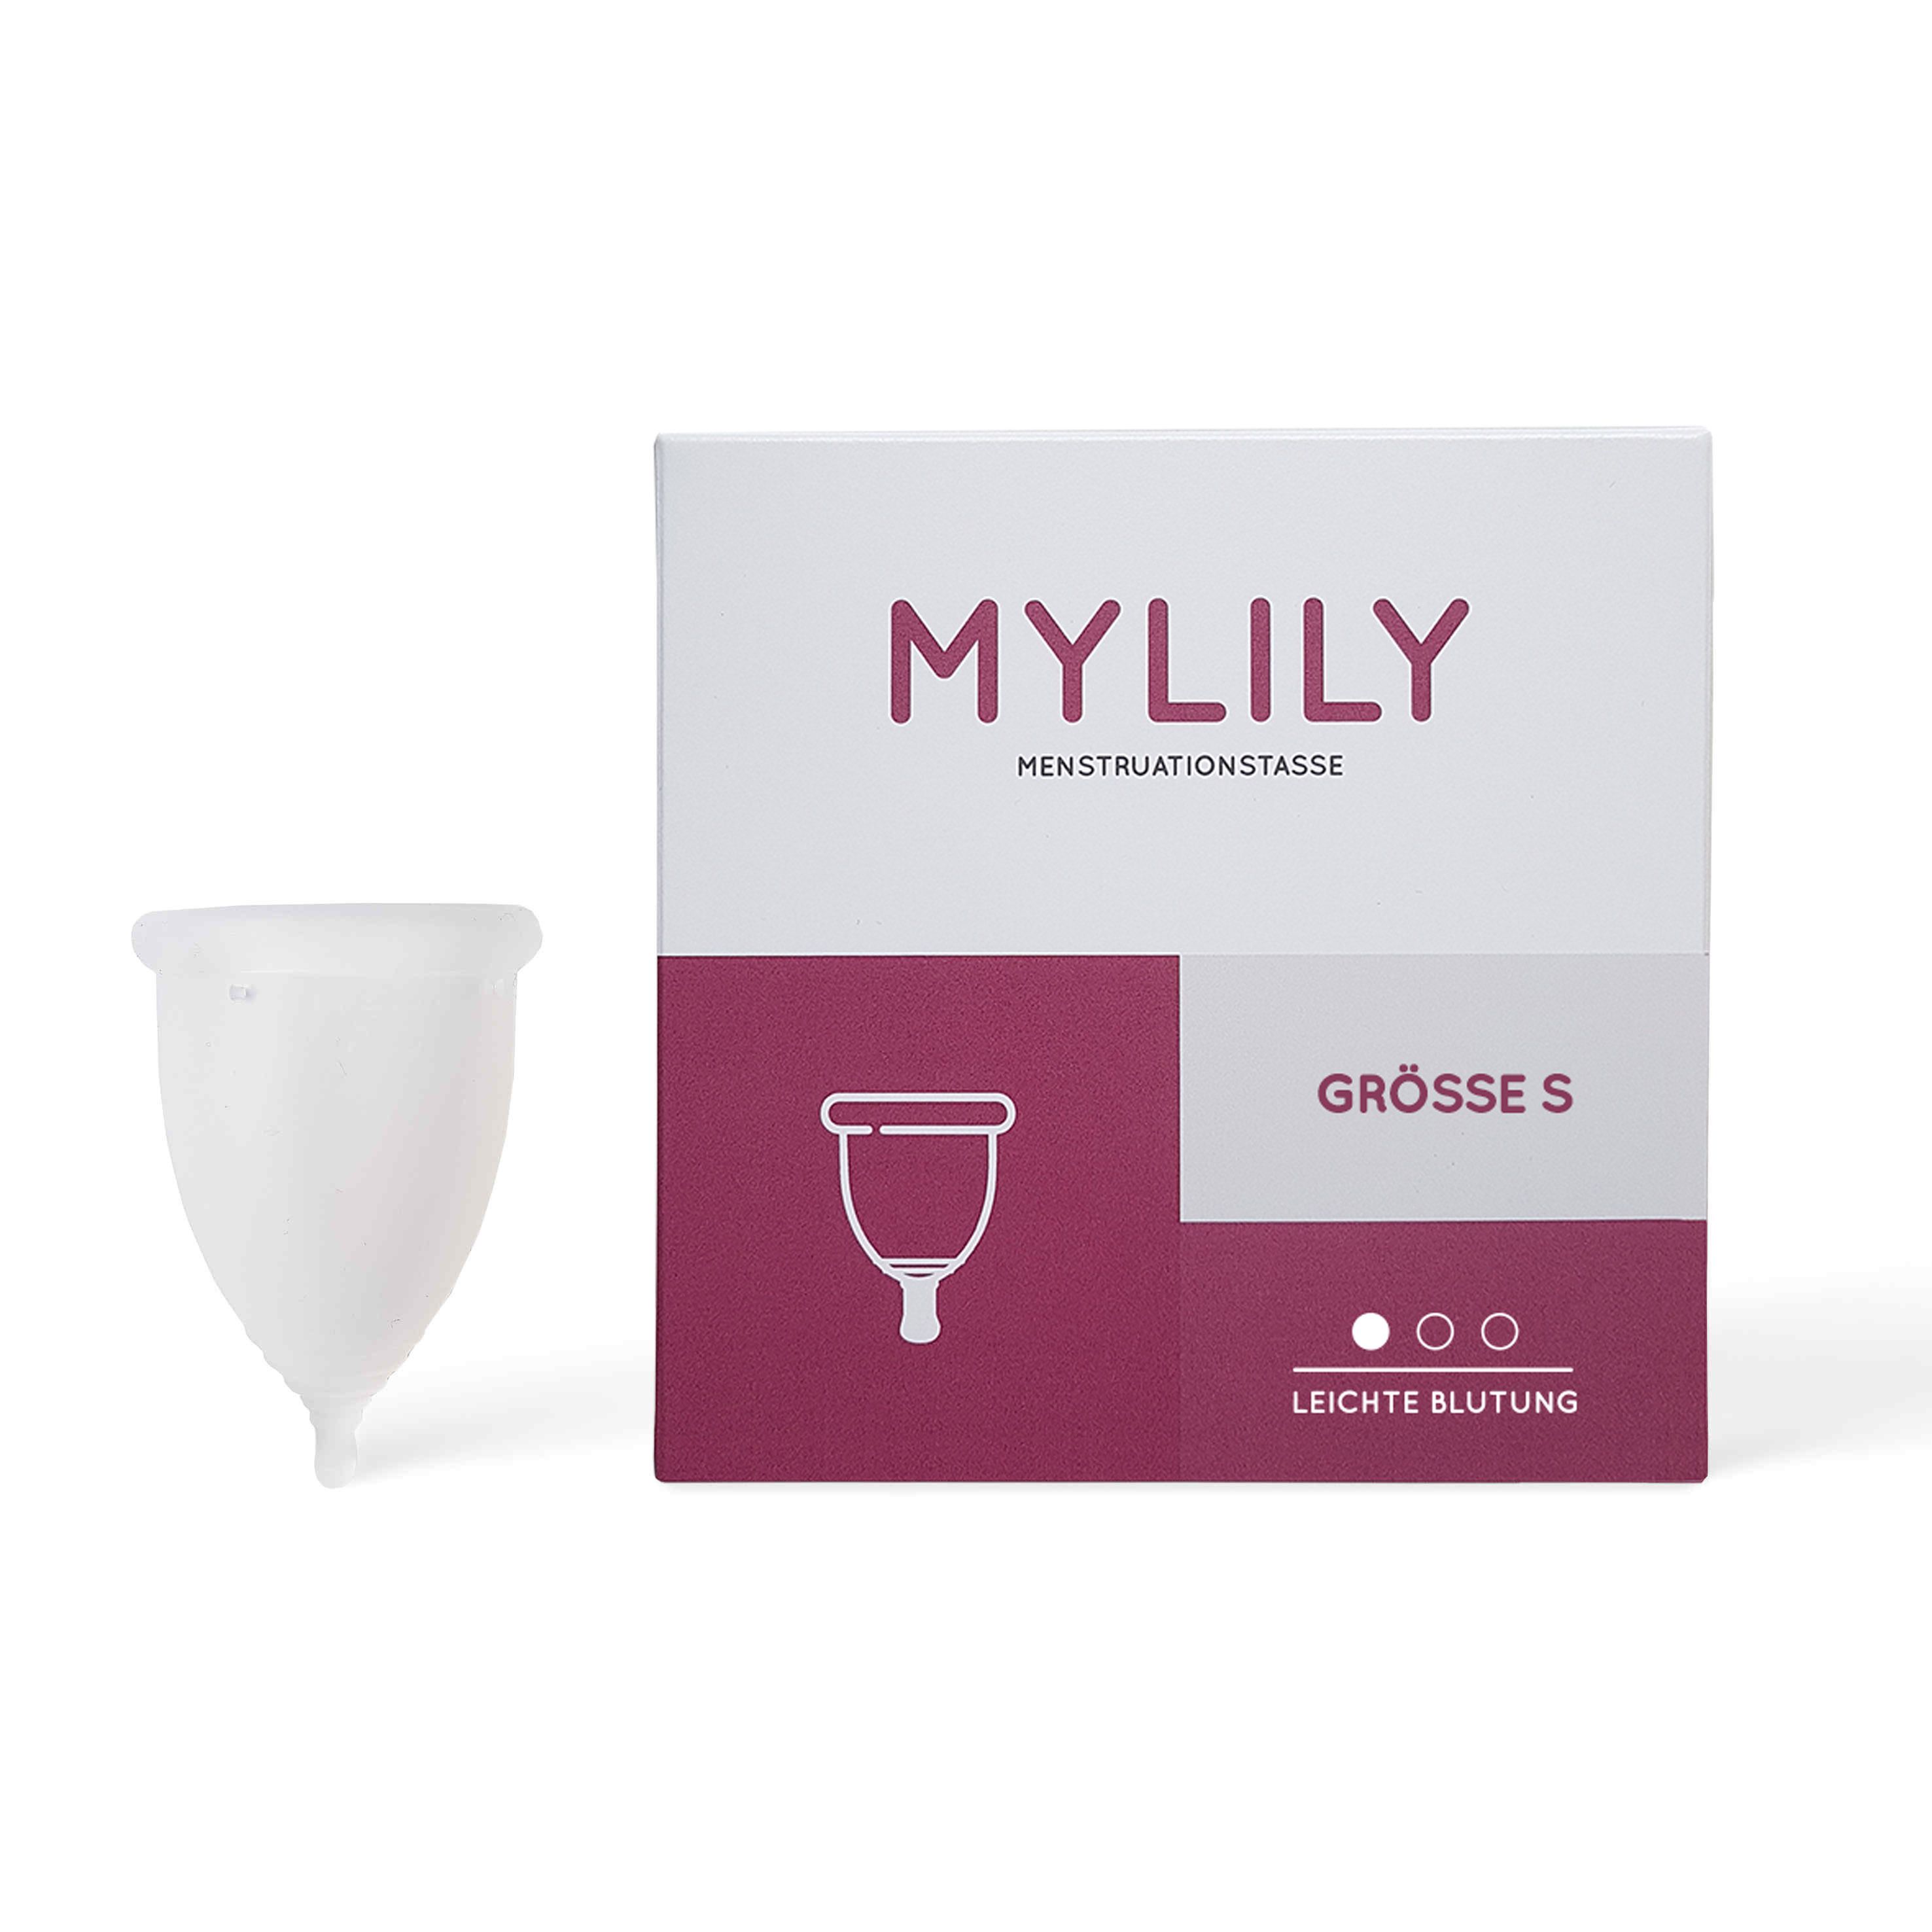 Mylily Menstruationstasse - S